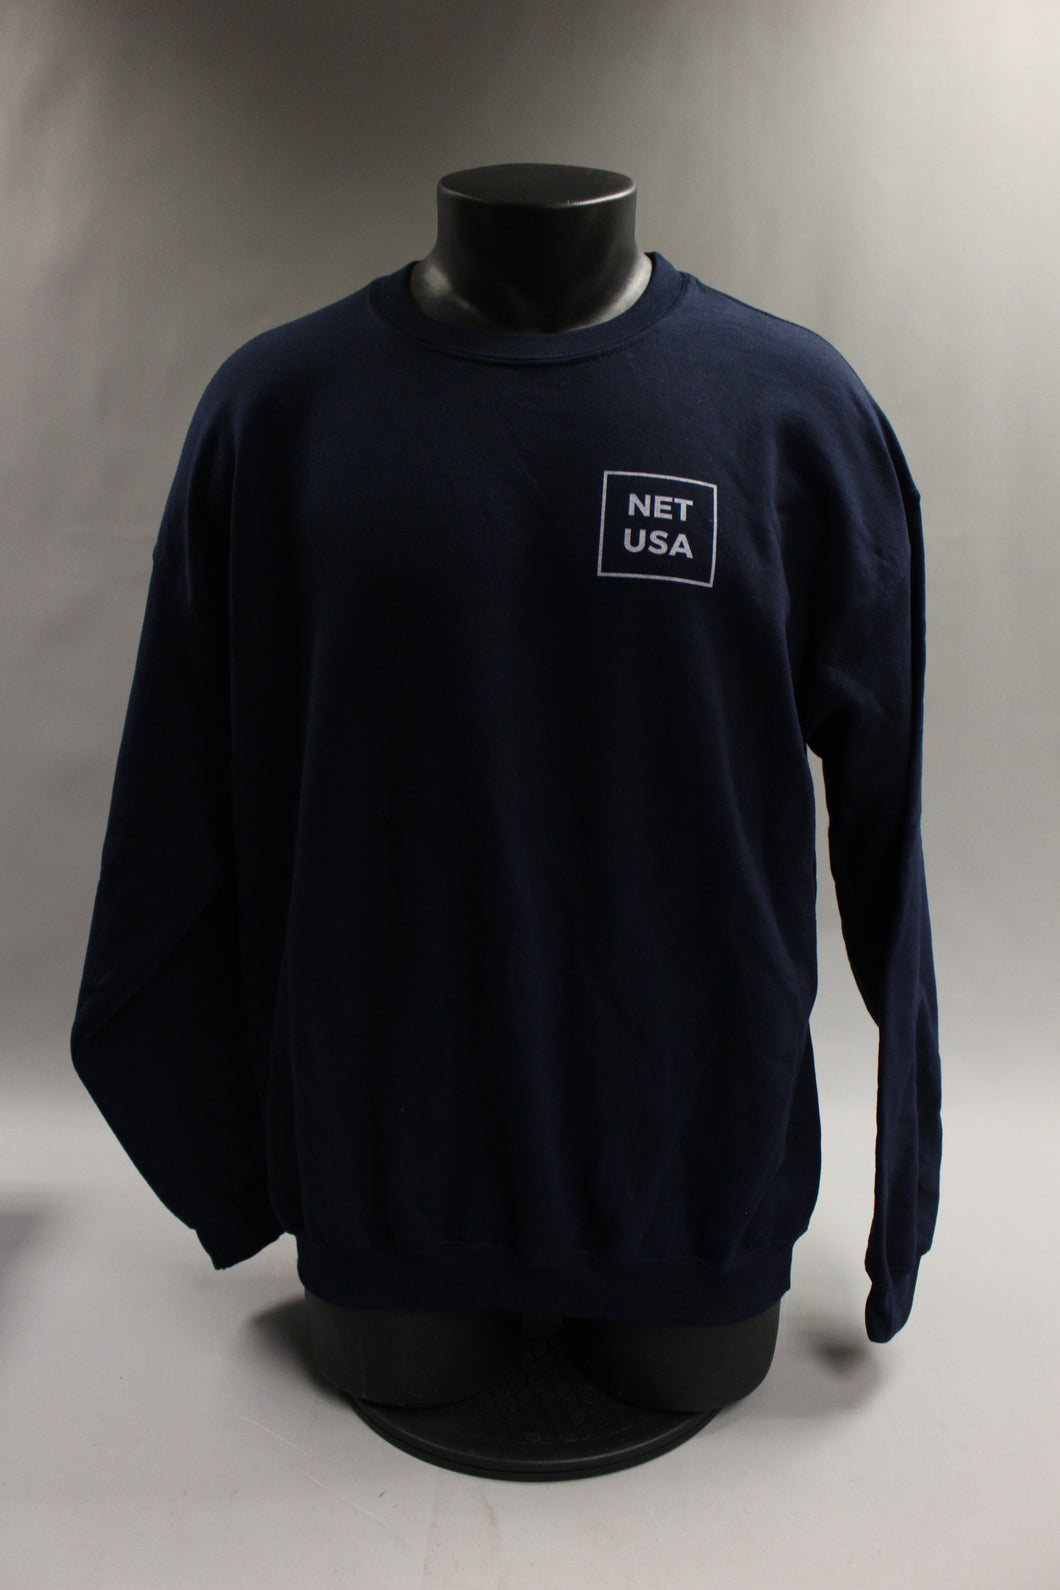 Gildan NET USA Crewneck Sweater Sweatshirt - Navy Blue - Large - Excellent